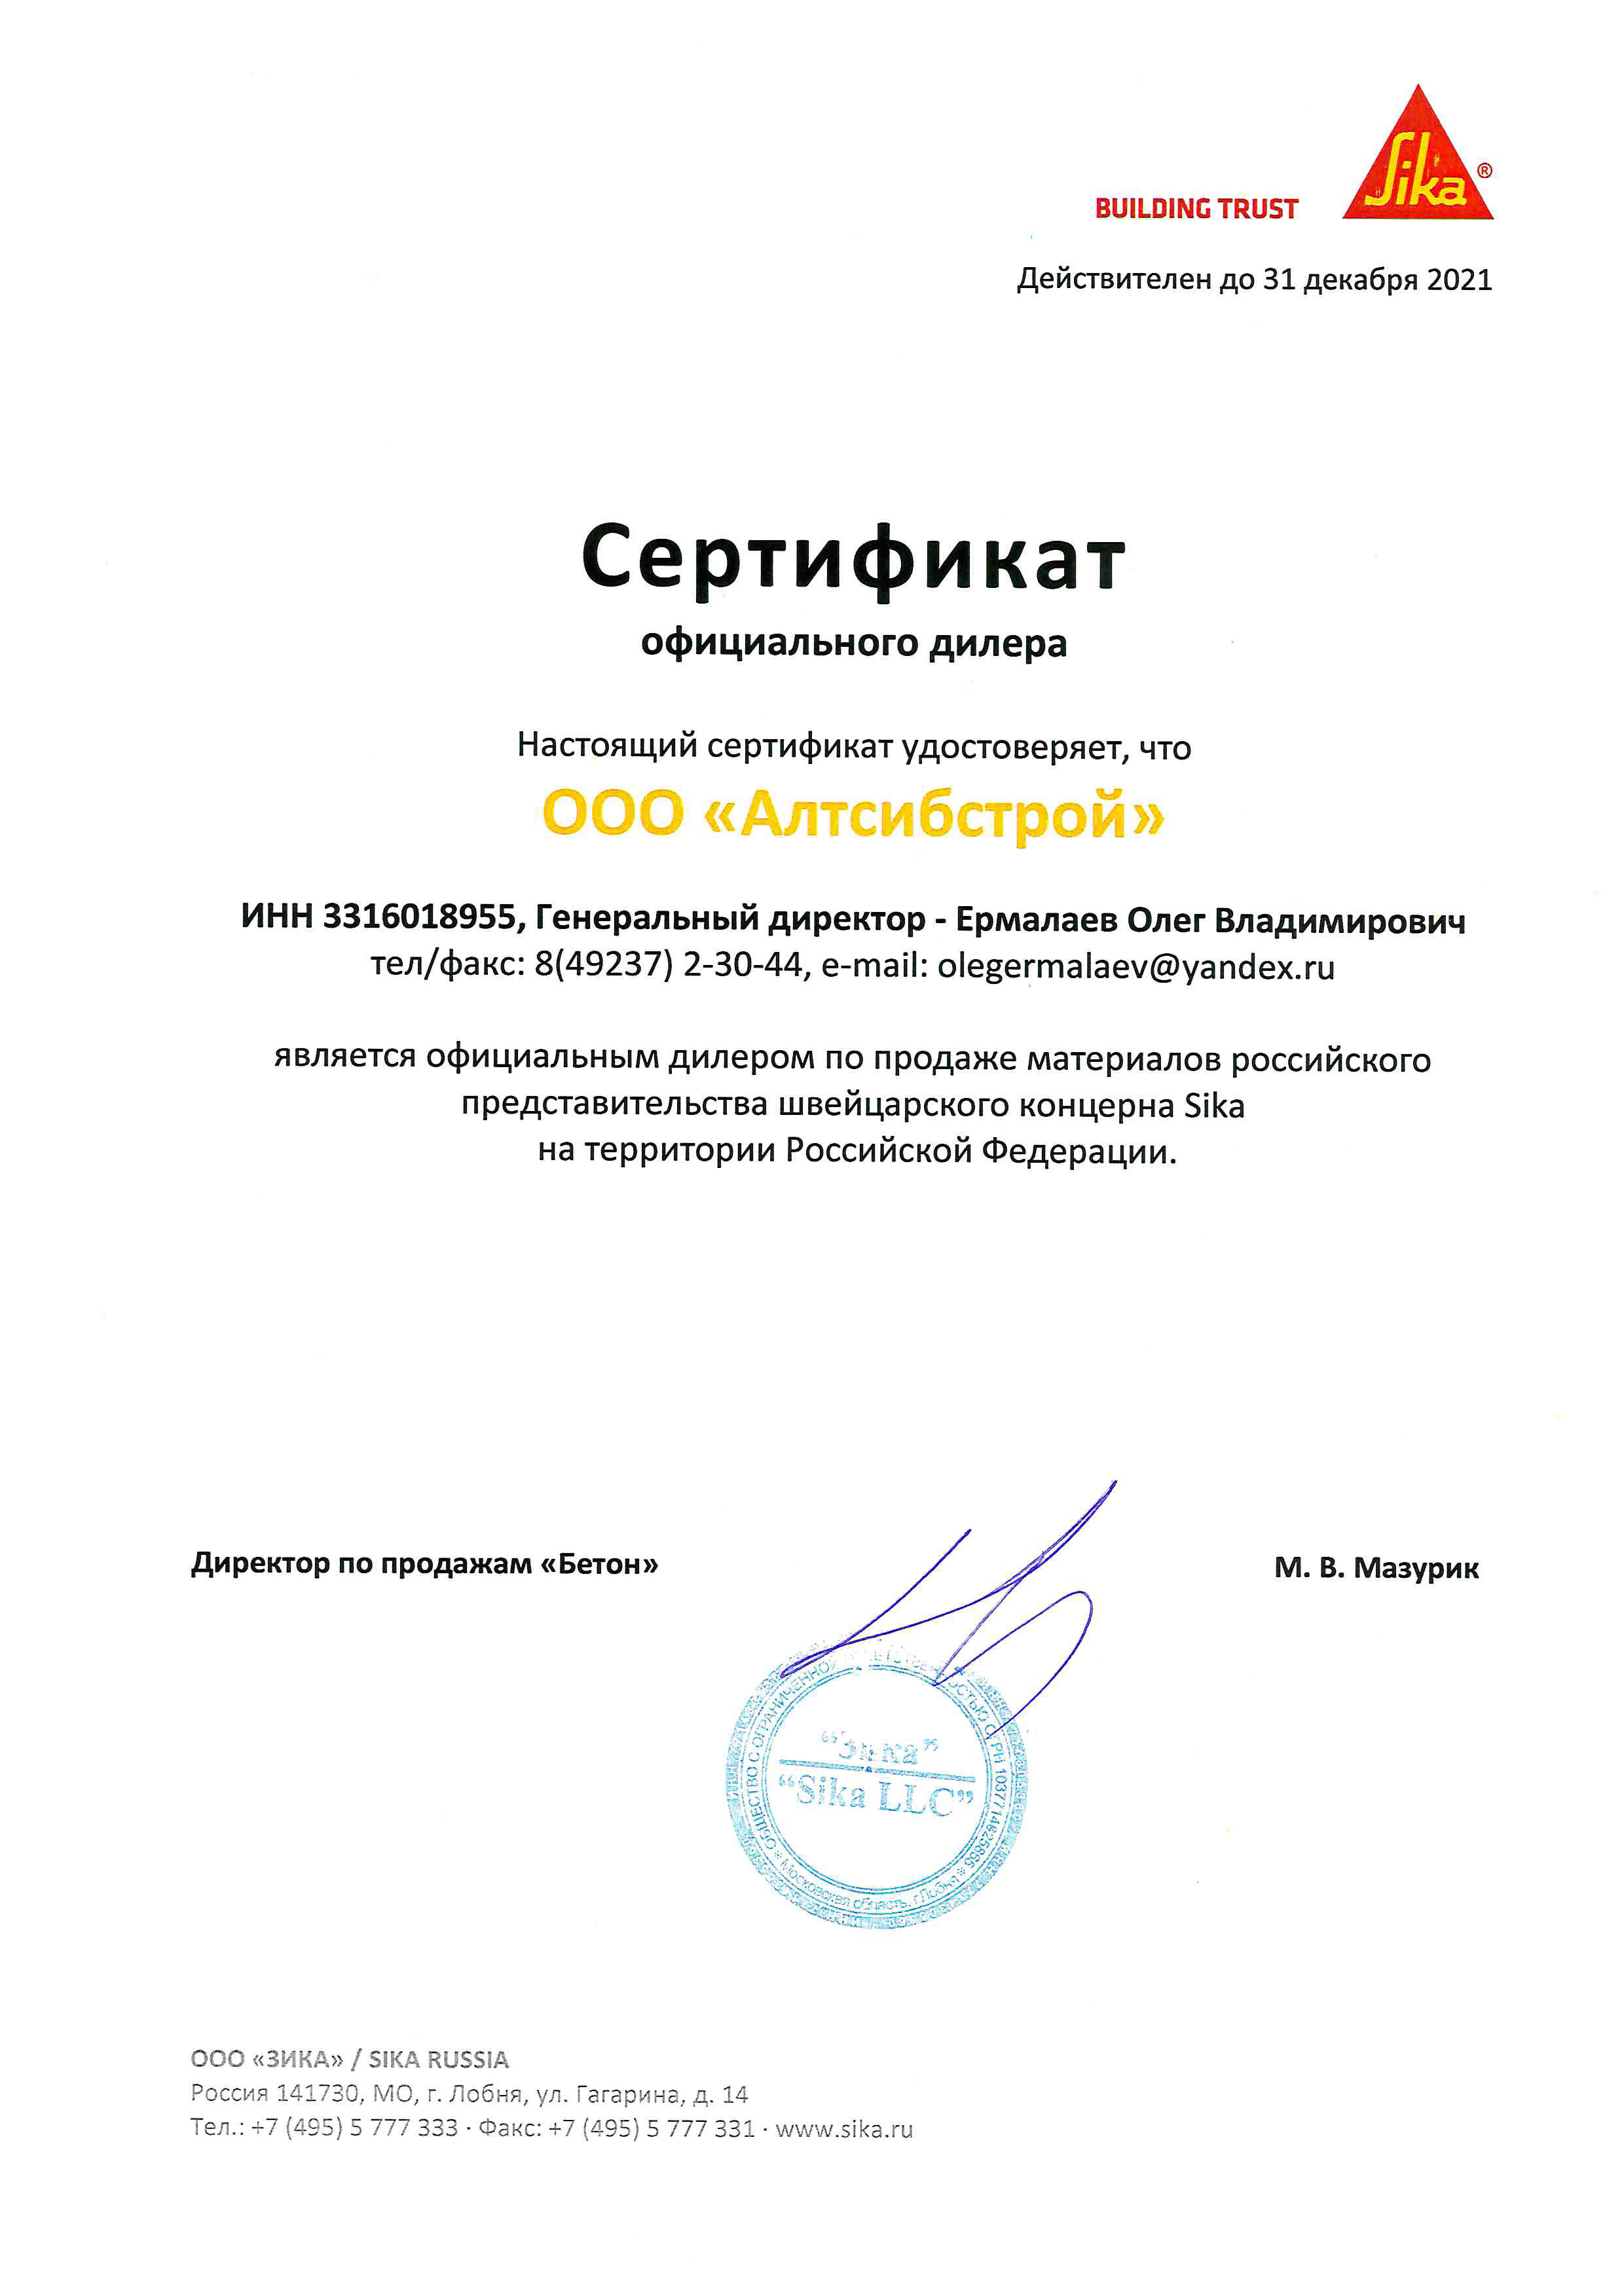 Сертификат дилера на 20214 год